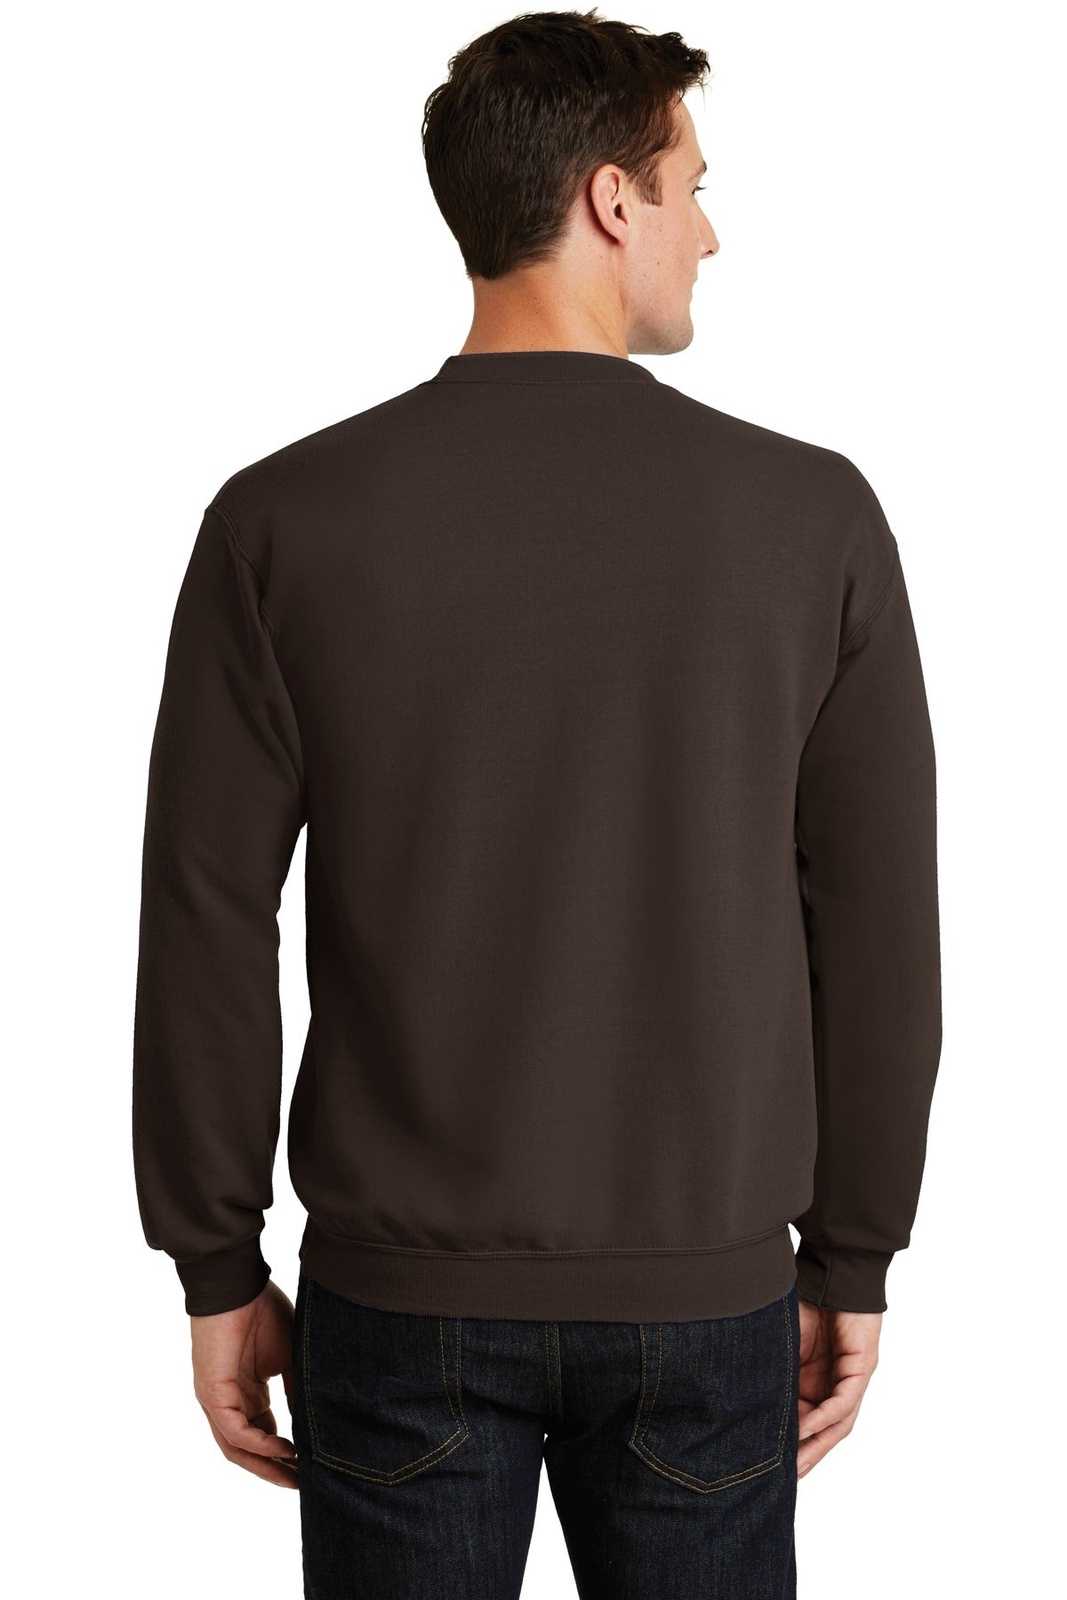 Port & Company PC78 Core Fleece Crewneck Sweatshirt - Dark Chocolate Brown - HIT a Double - 1